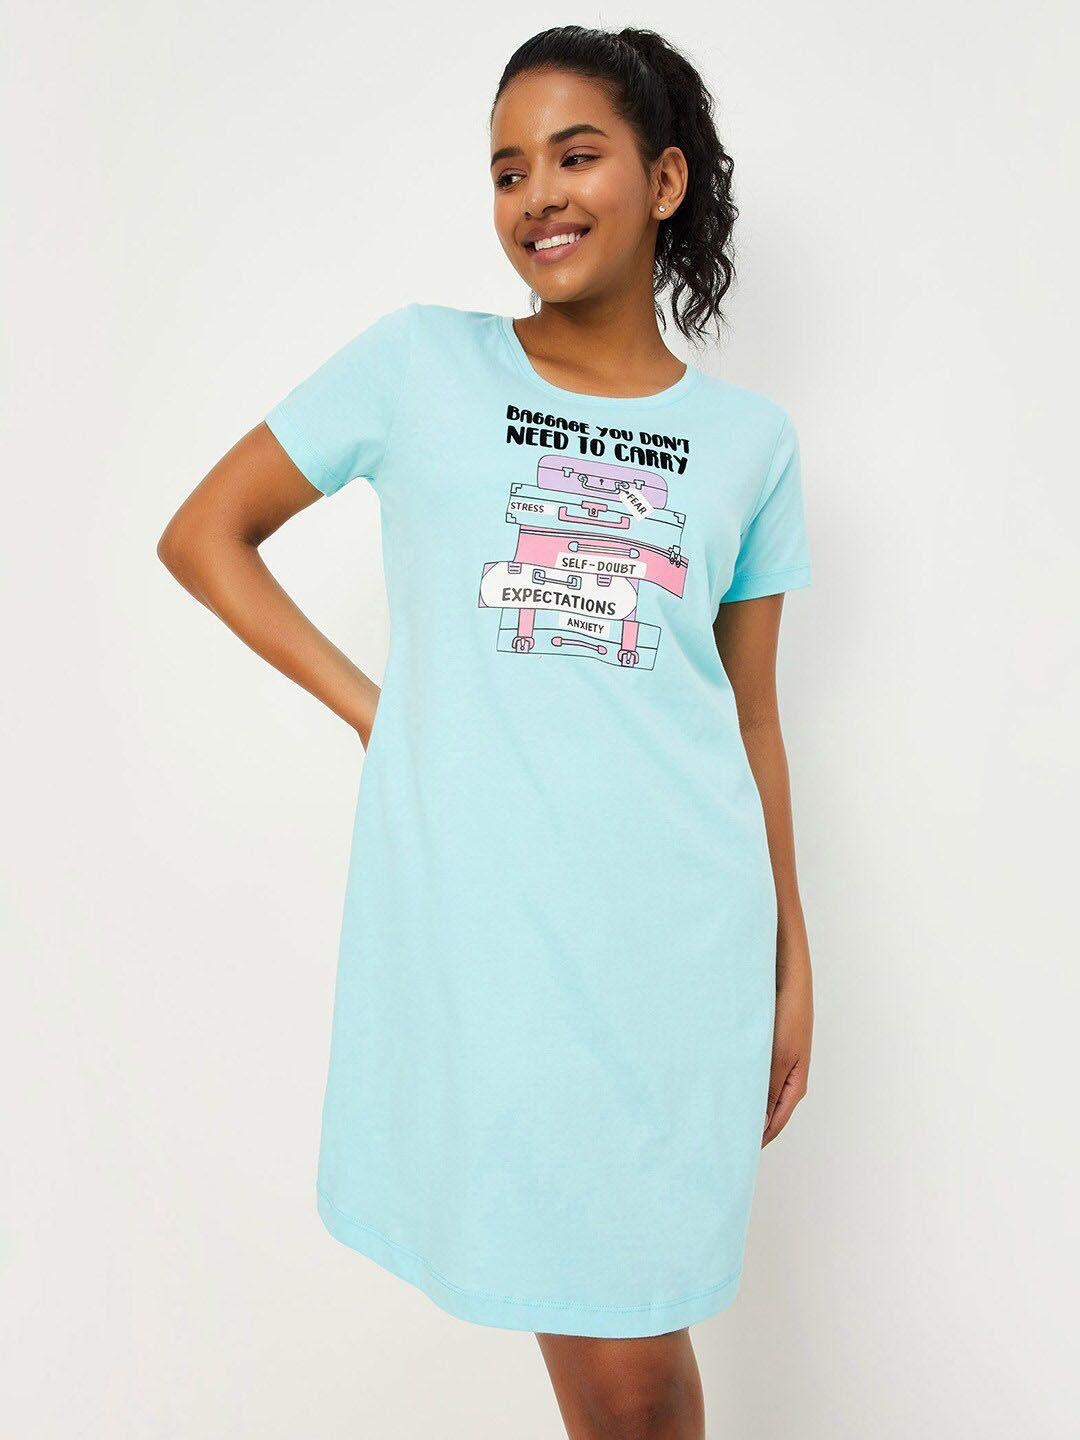 max graphic printed pure cotton t-shirt nightdress